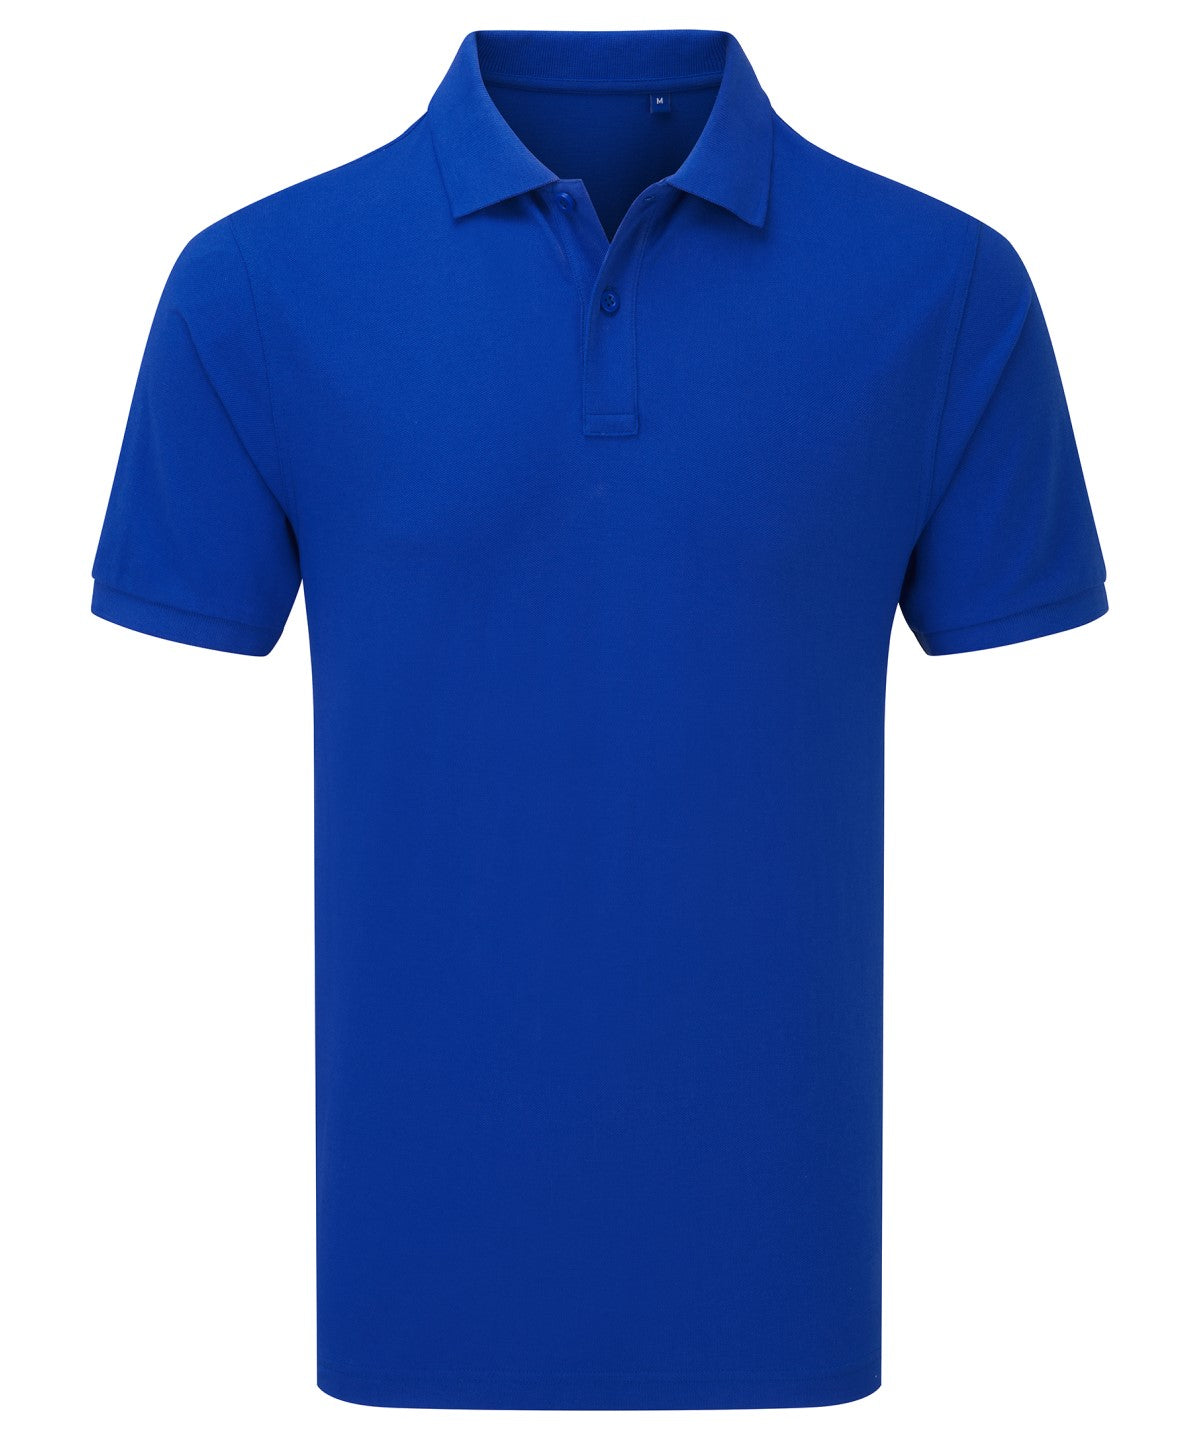 Unisex short sleeve polo shirt, powered by HeiQ Viroblock